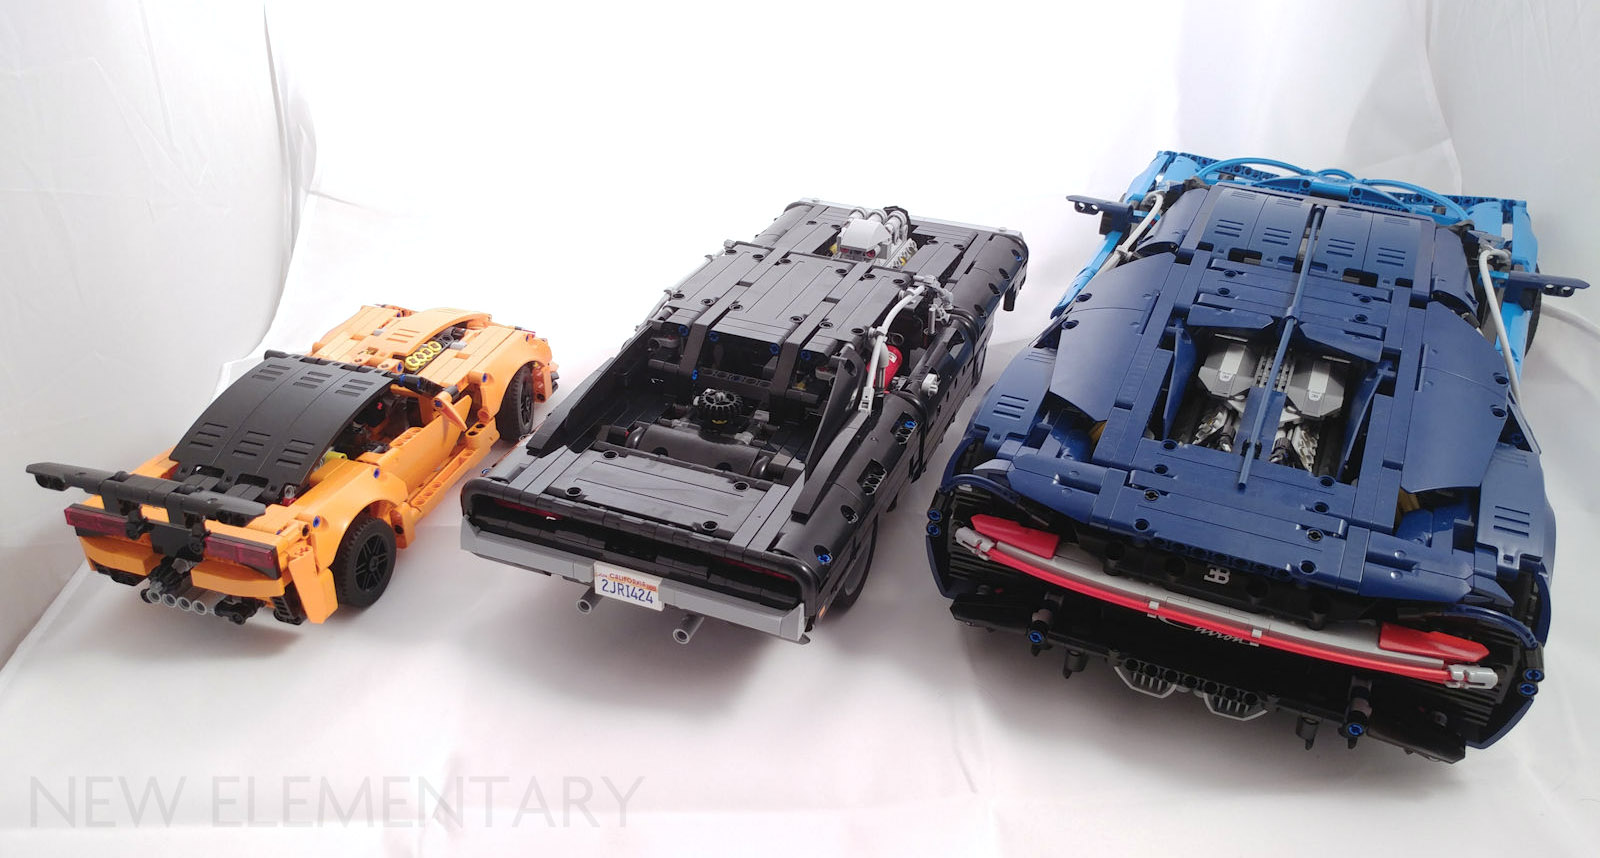 Avis] LEGO Fast and Furious : on a construit la Dodge Charger de Dom !